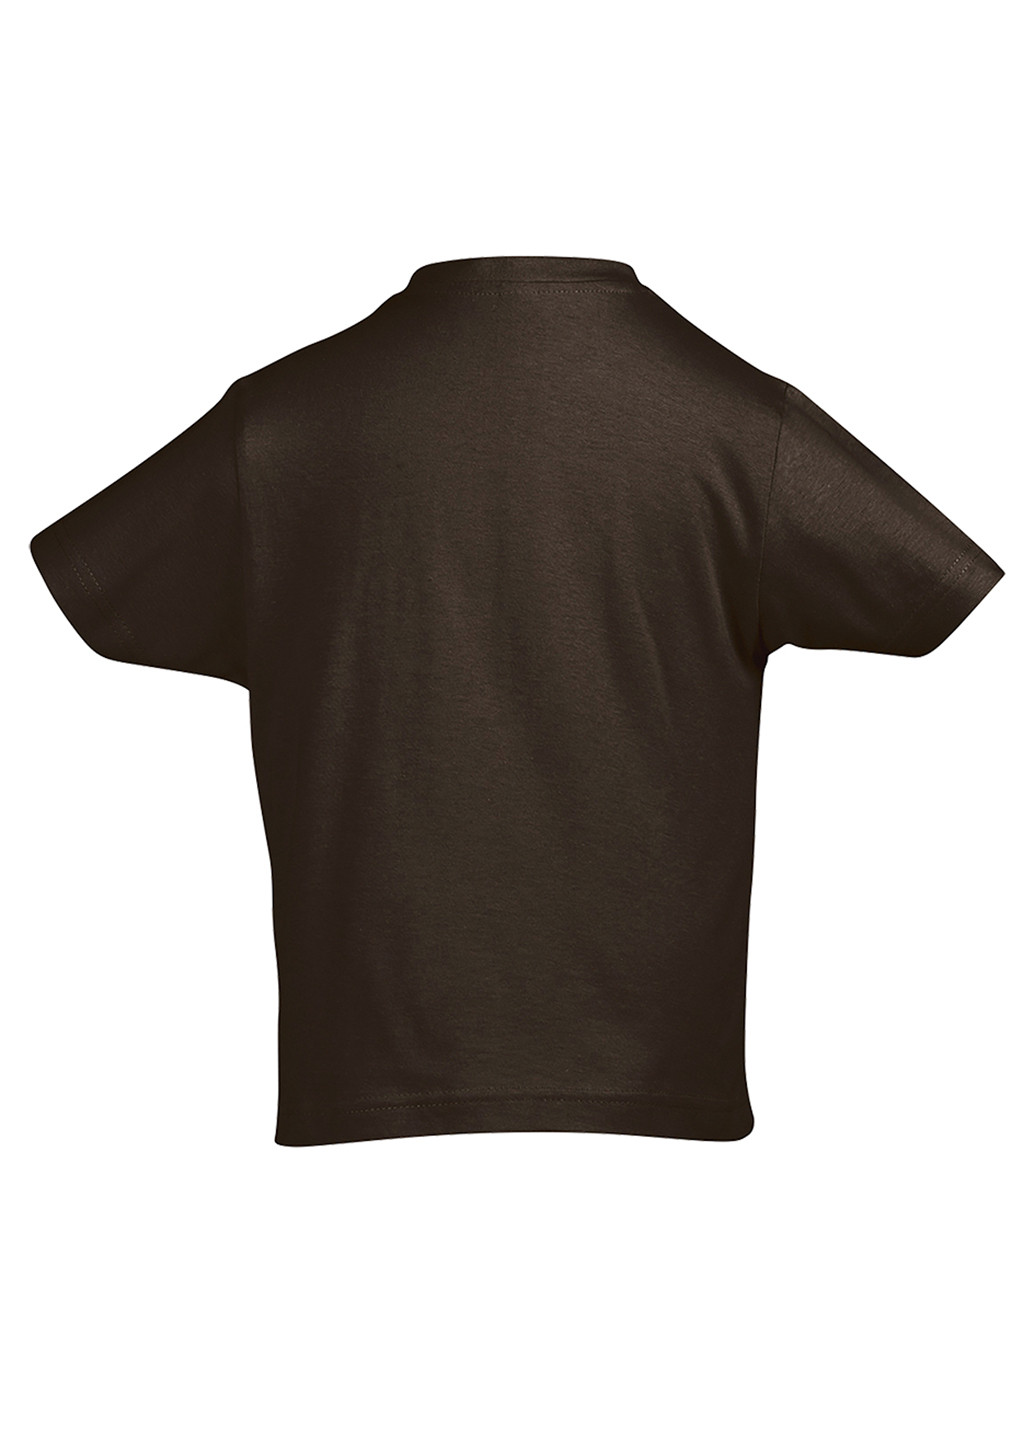 Шоколадная летняя футболка с коротким рукавом Sol's